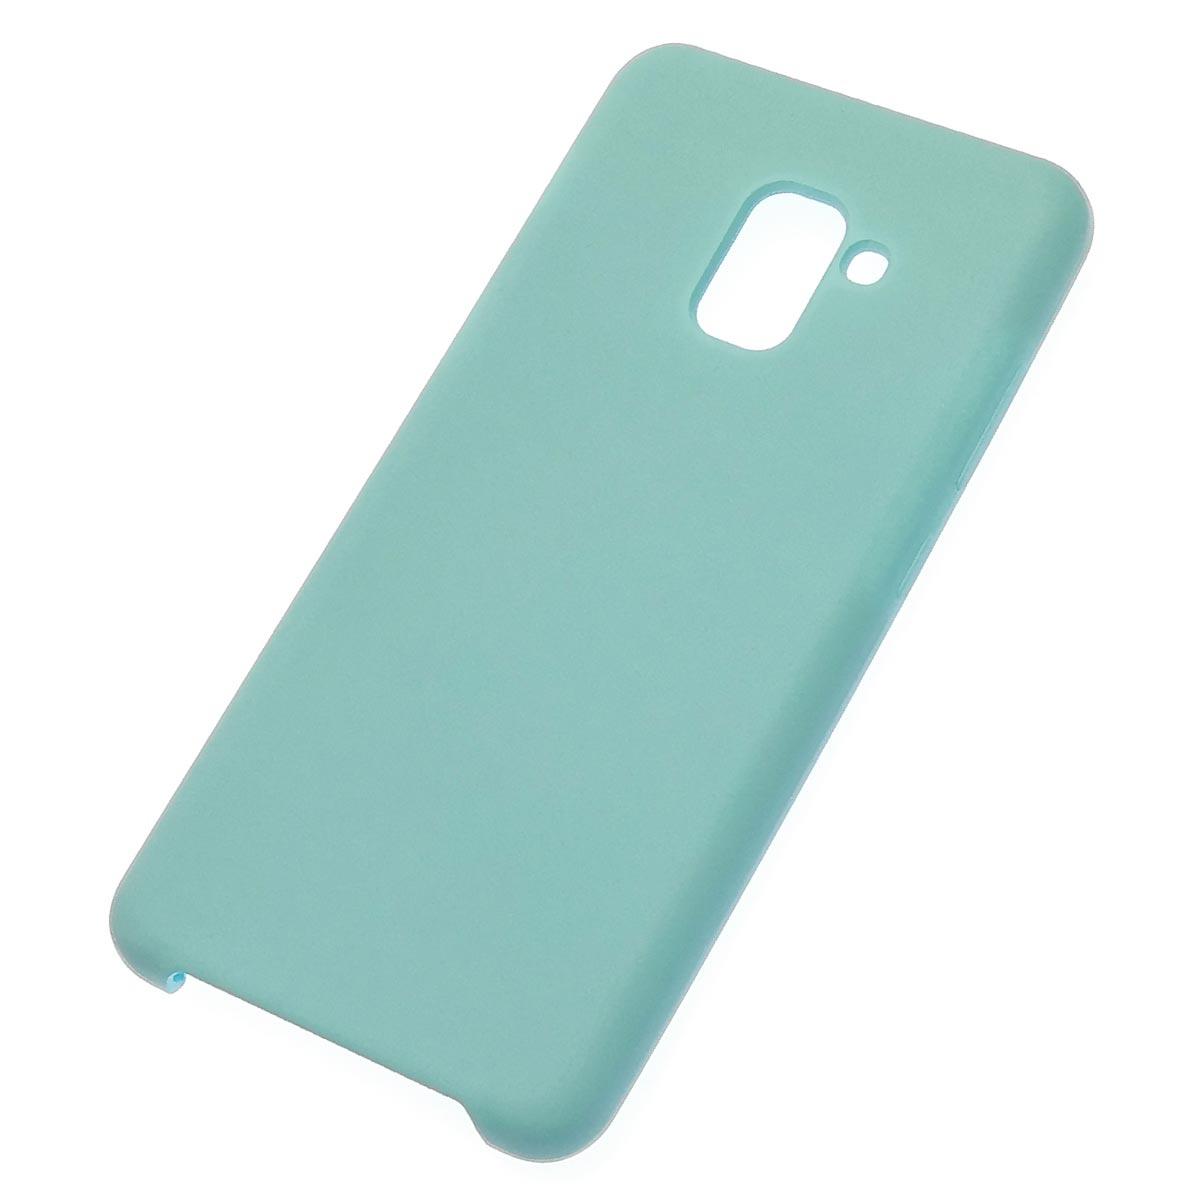 Чехол накладка Silicon Cover для SAMSUNG Galaxy A8 Plus (SM-A730F), силикон, бархат, цвет цвет бирюзовый